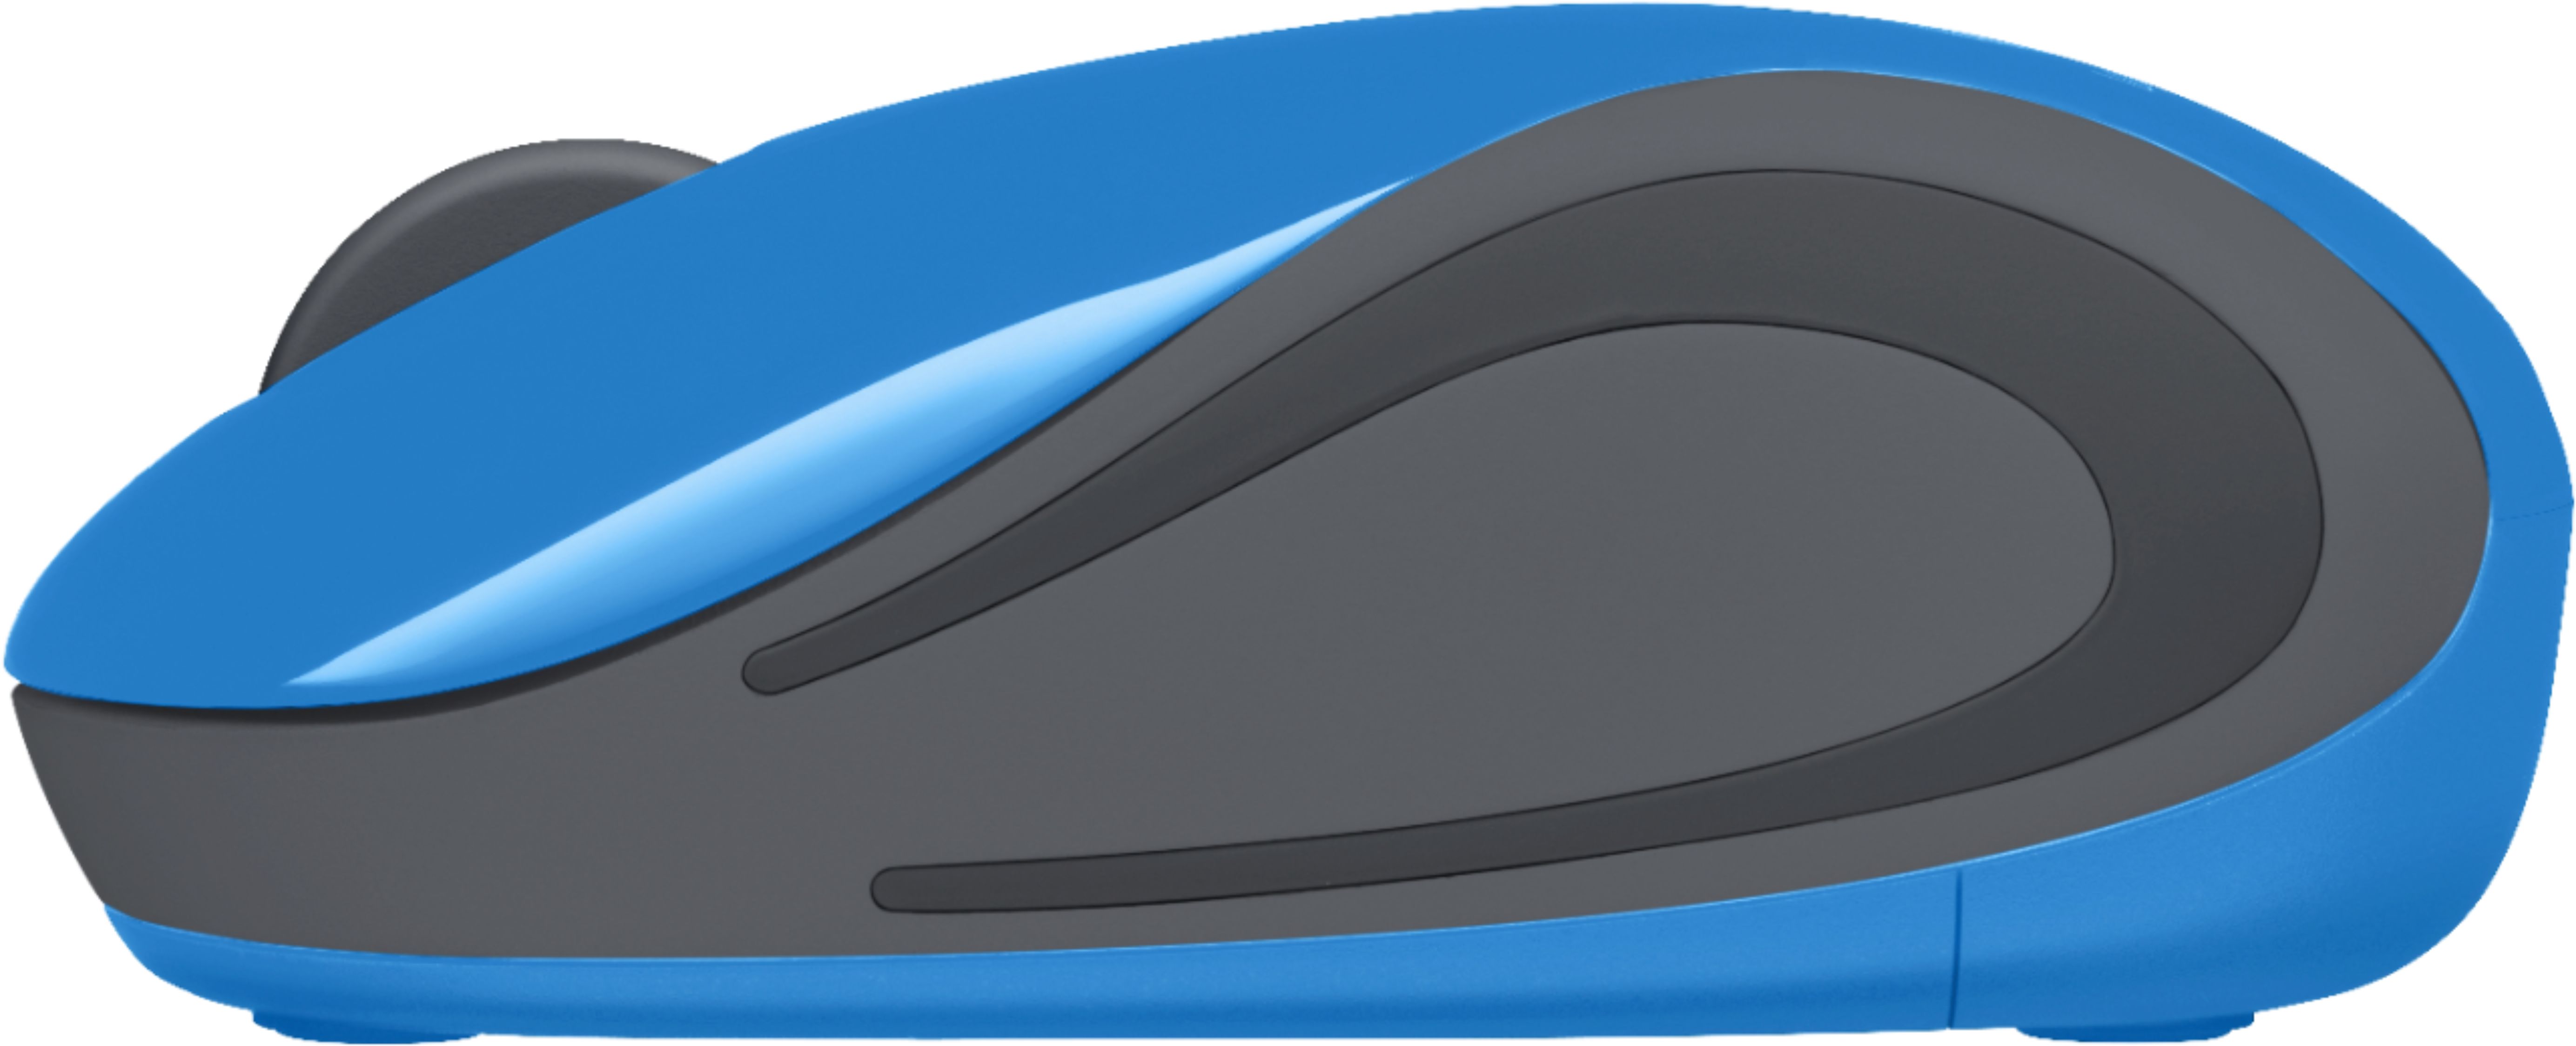 Best Buy: Logitech M187 Mini Wireless Optical Ambidextrous Mouse Blue-gray  910-002728